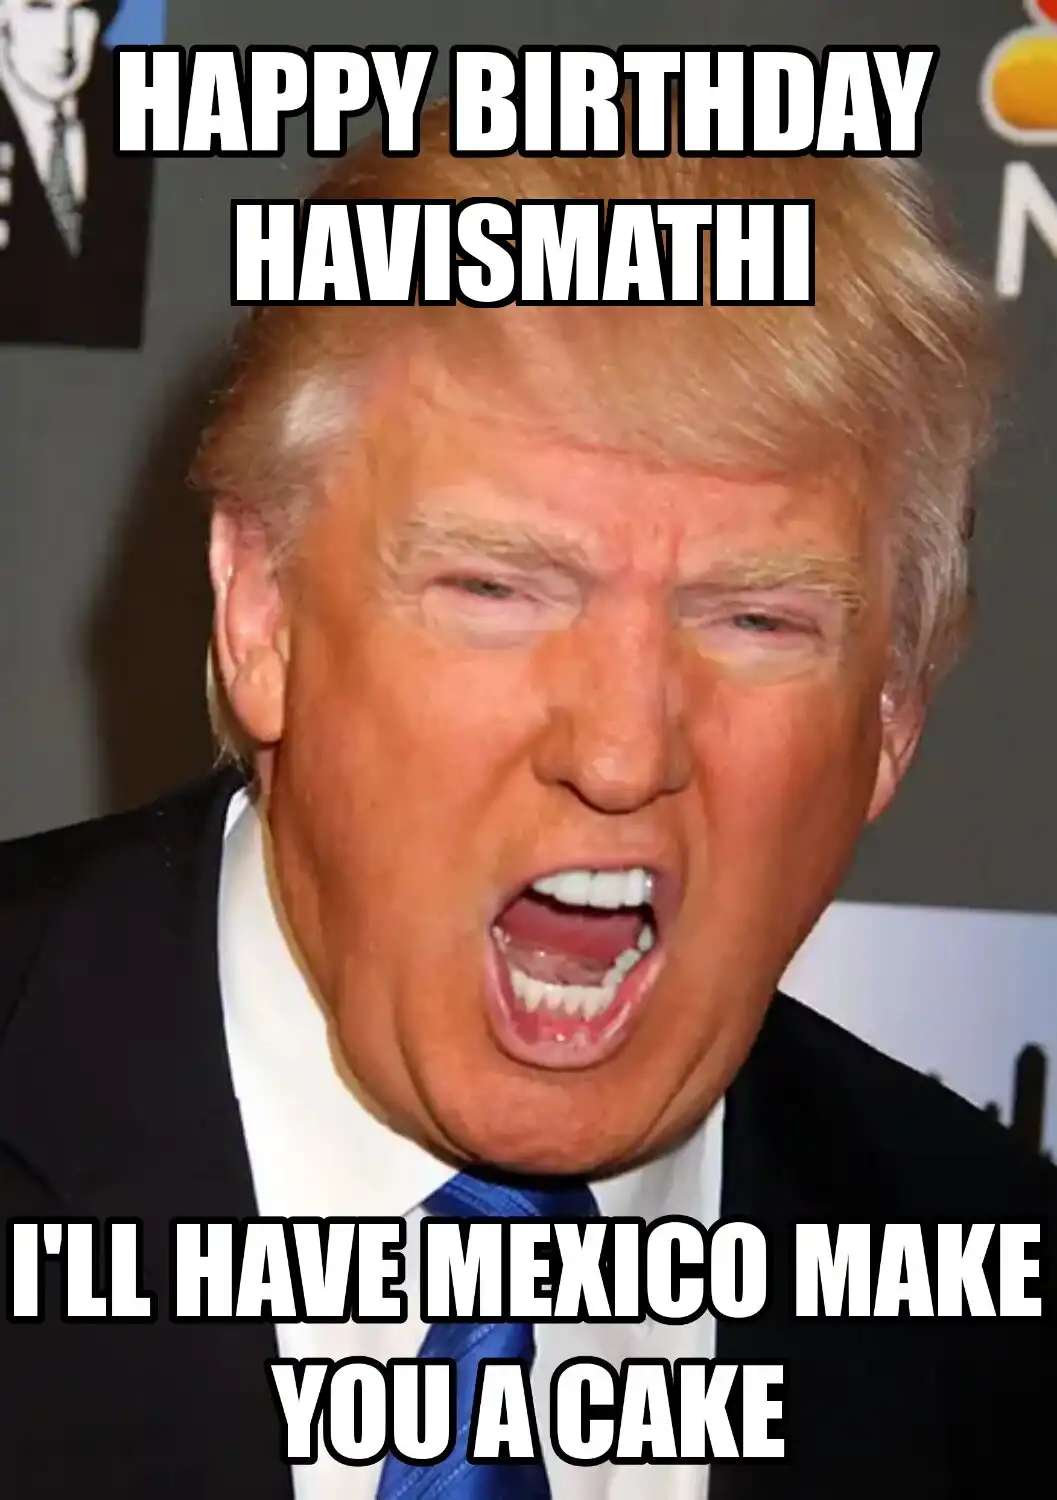 Happy Birthday Havismathi Mexico Make You A Cake Meme